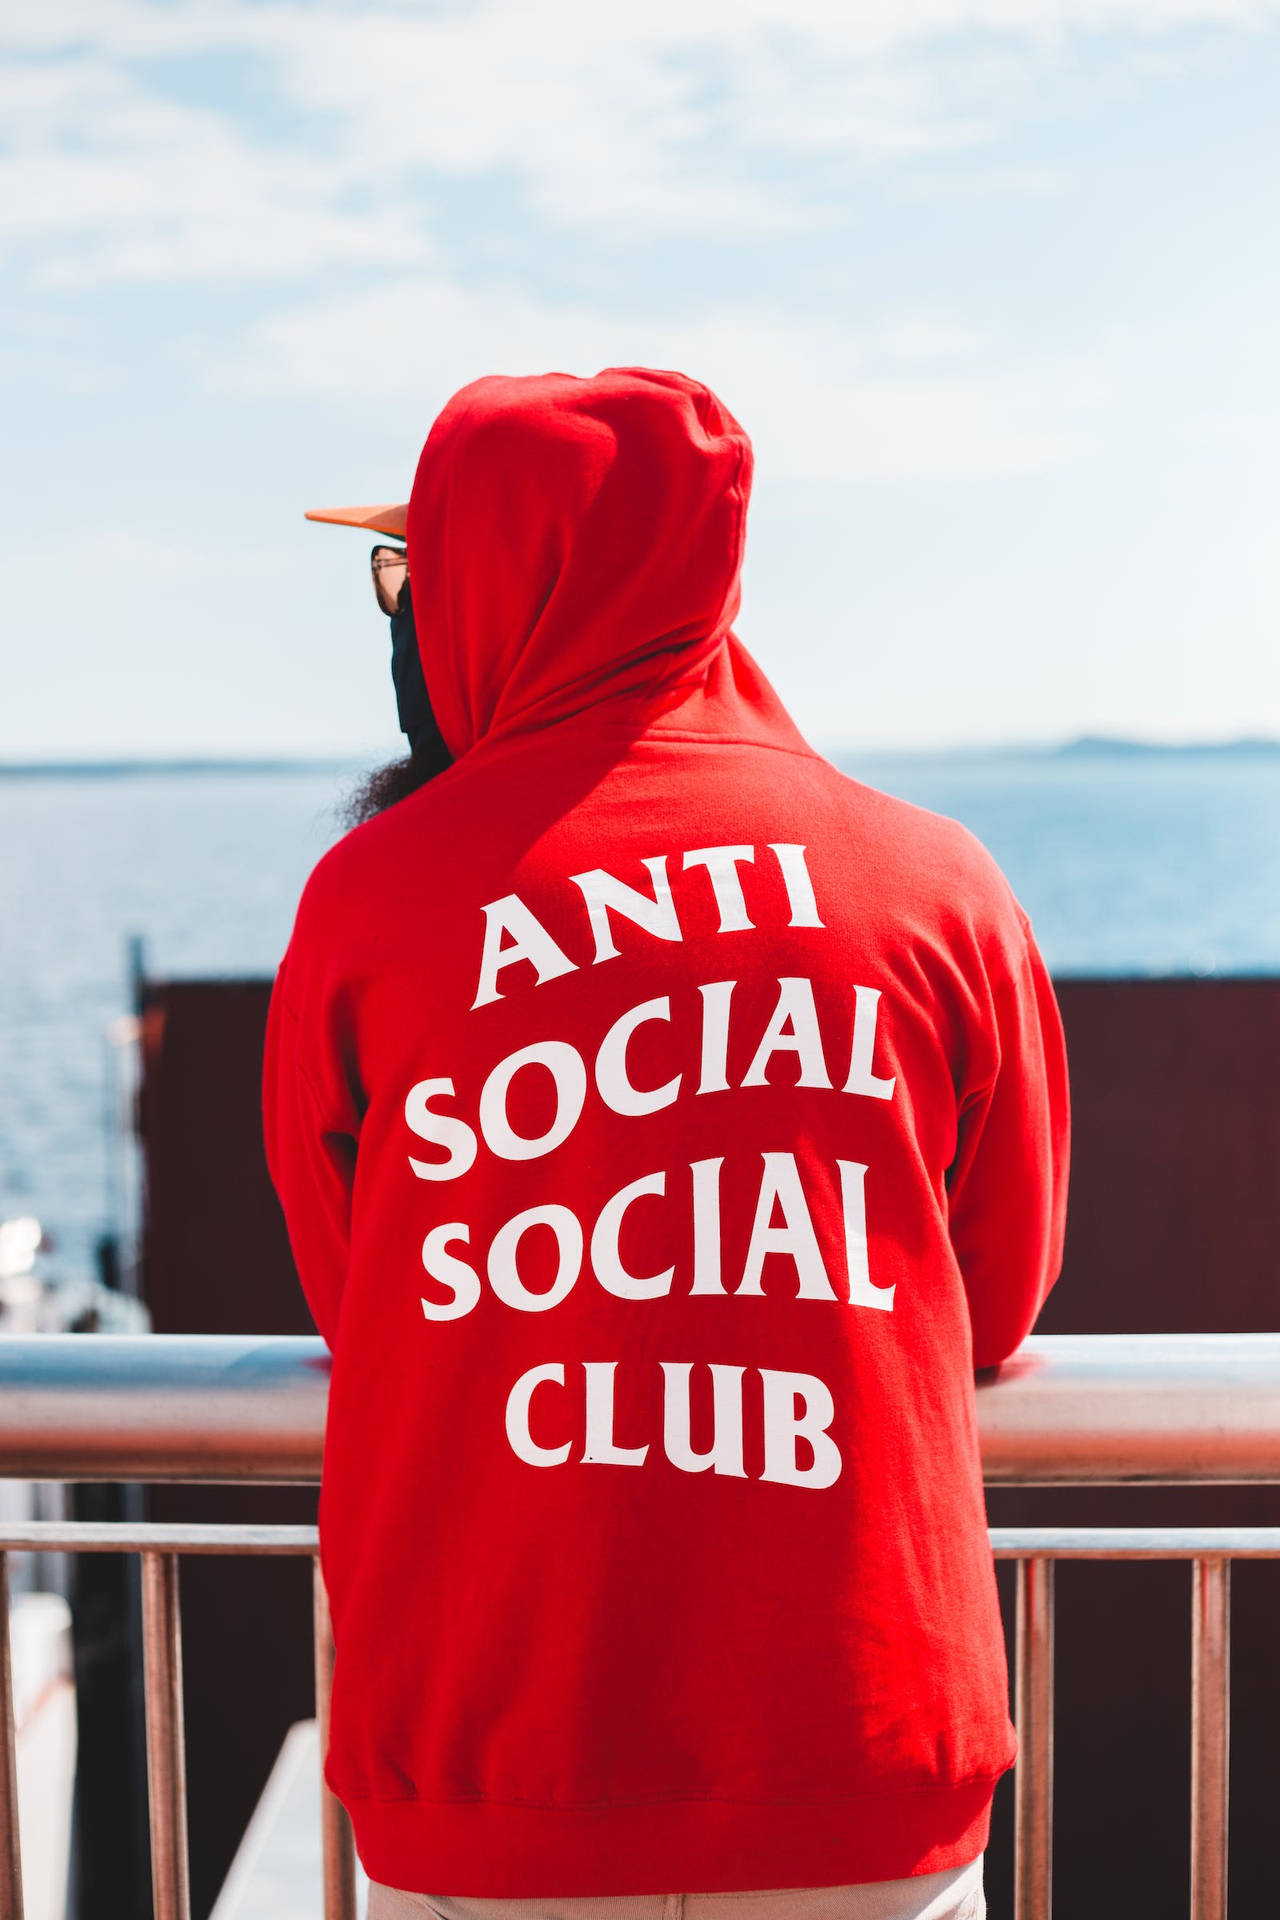 100+] Anti Social Social Club Wallpapers 